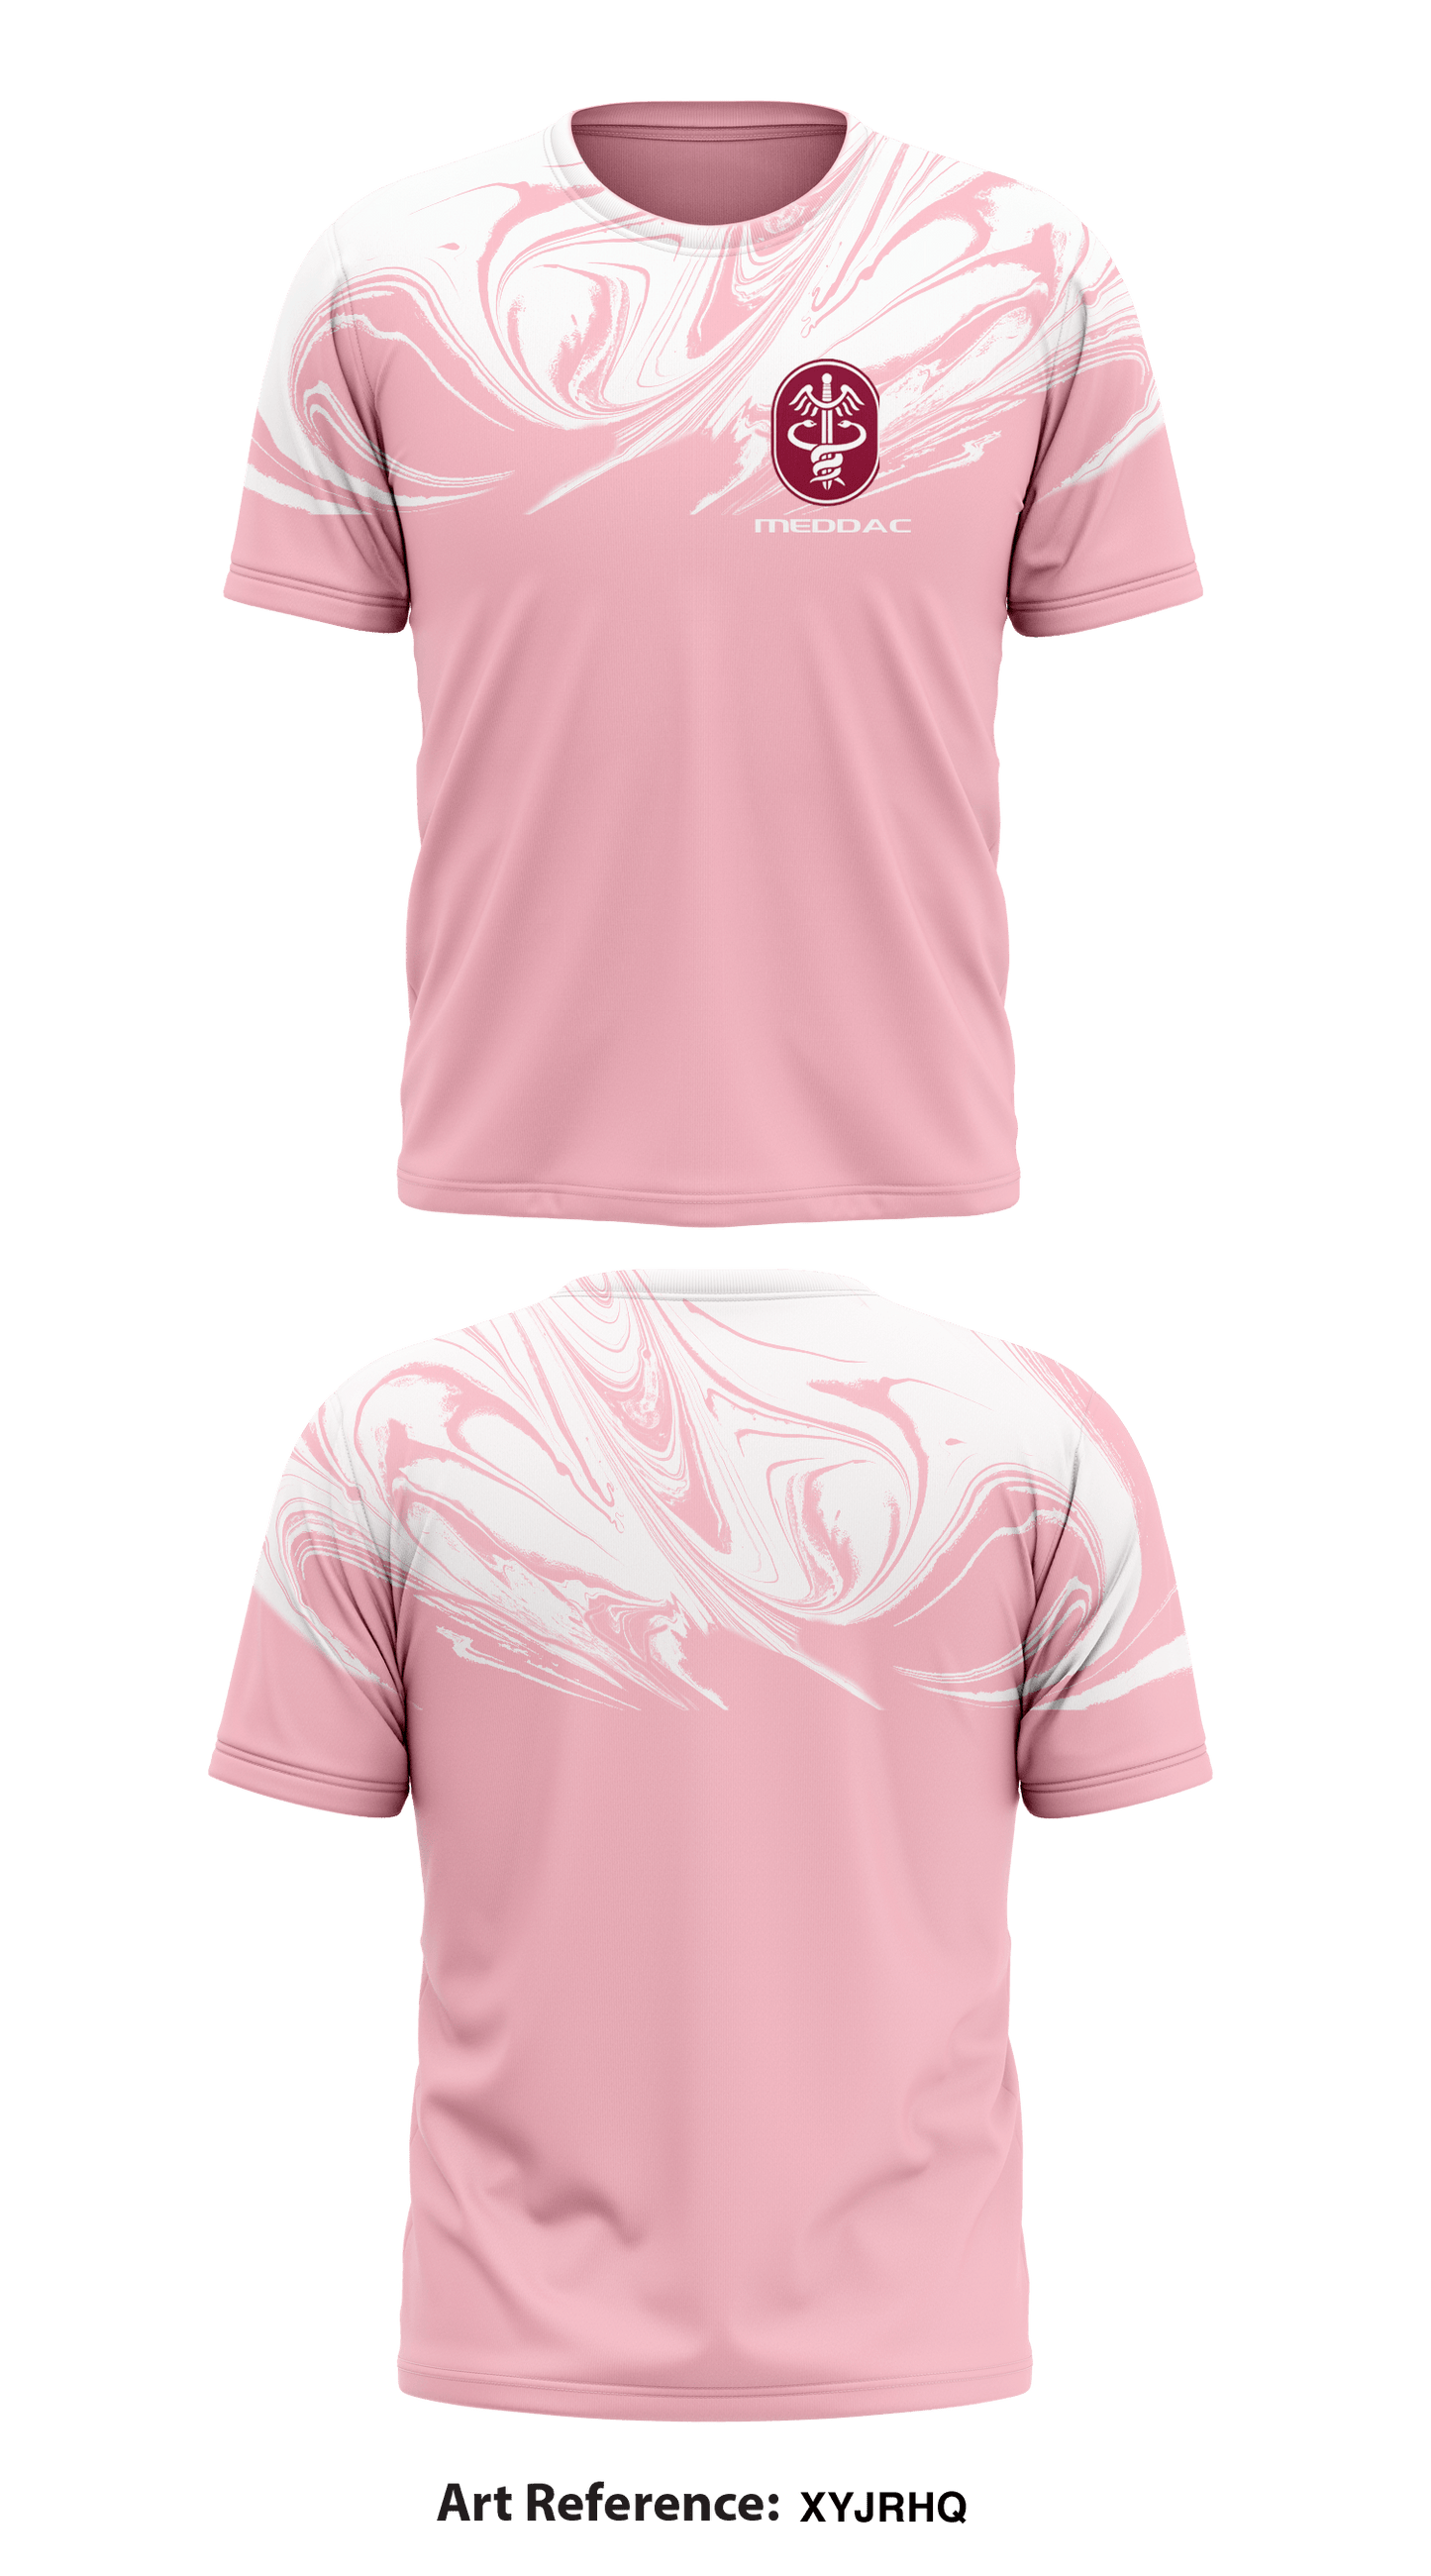 MEDDAC Short-Sleeve Performance Shirt -xYjRhQ – Emblem Athletic